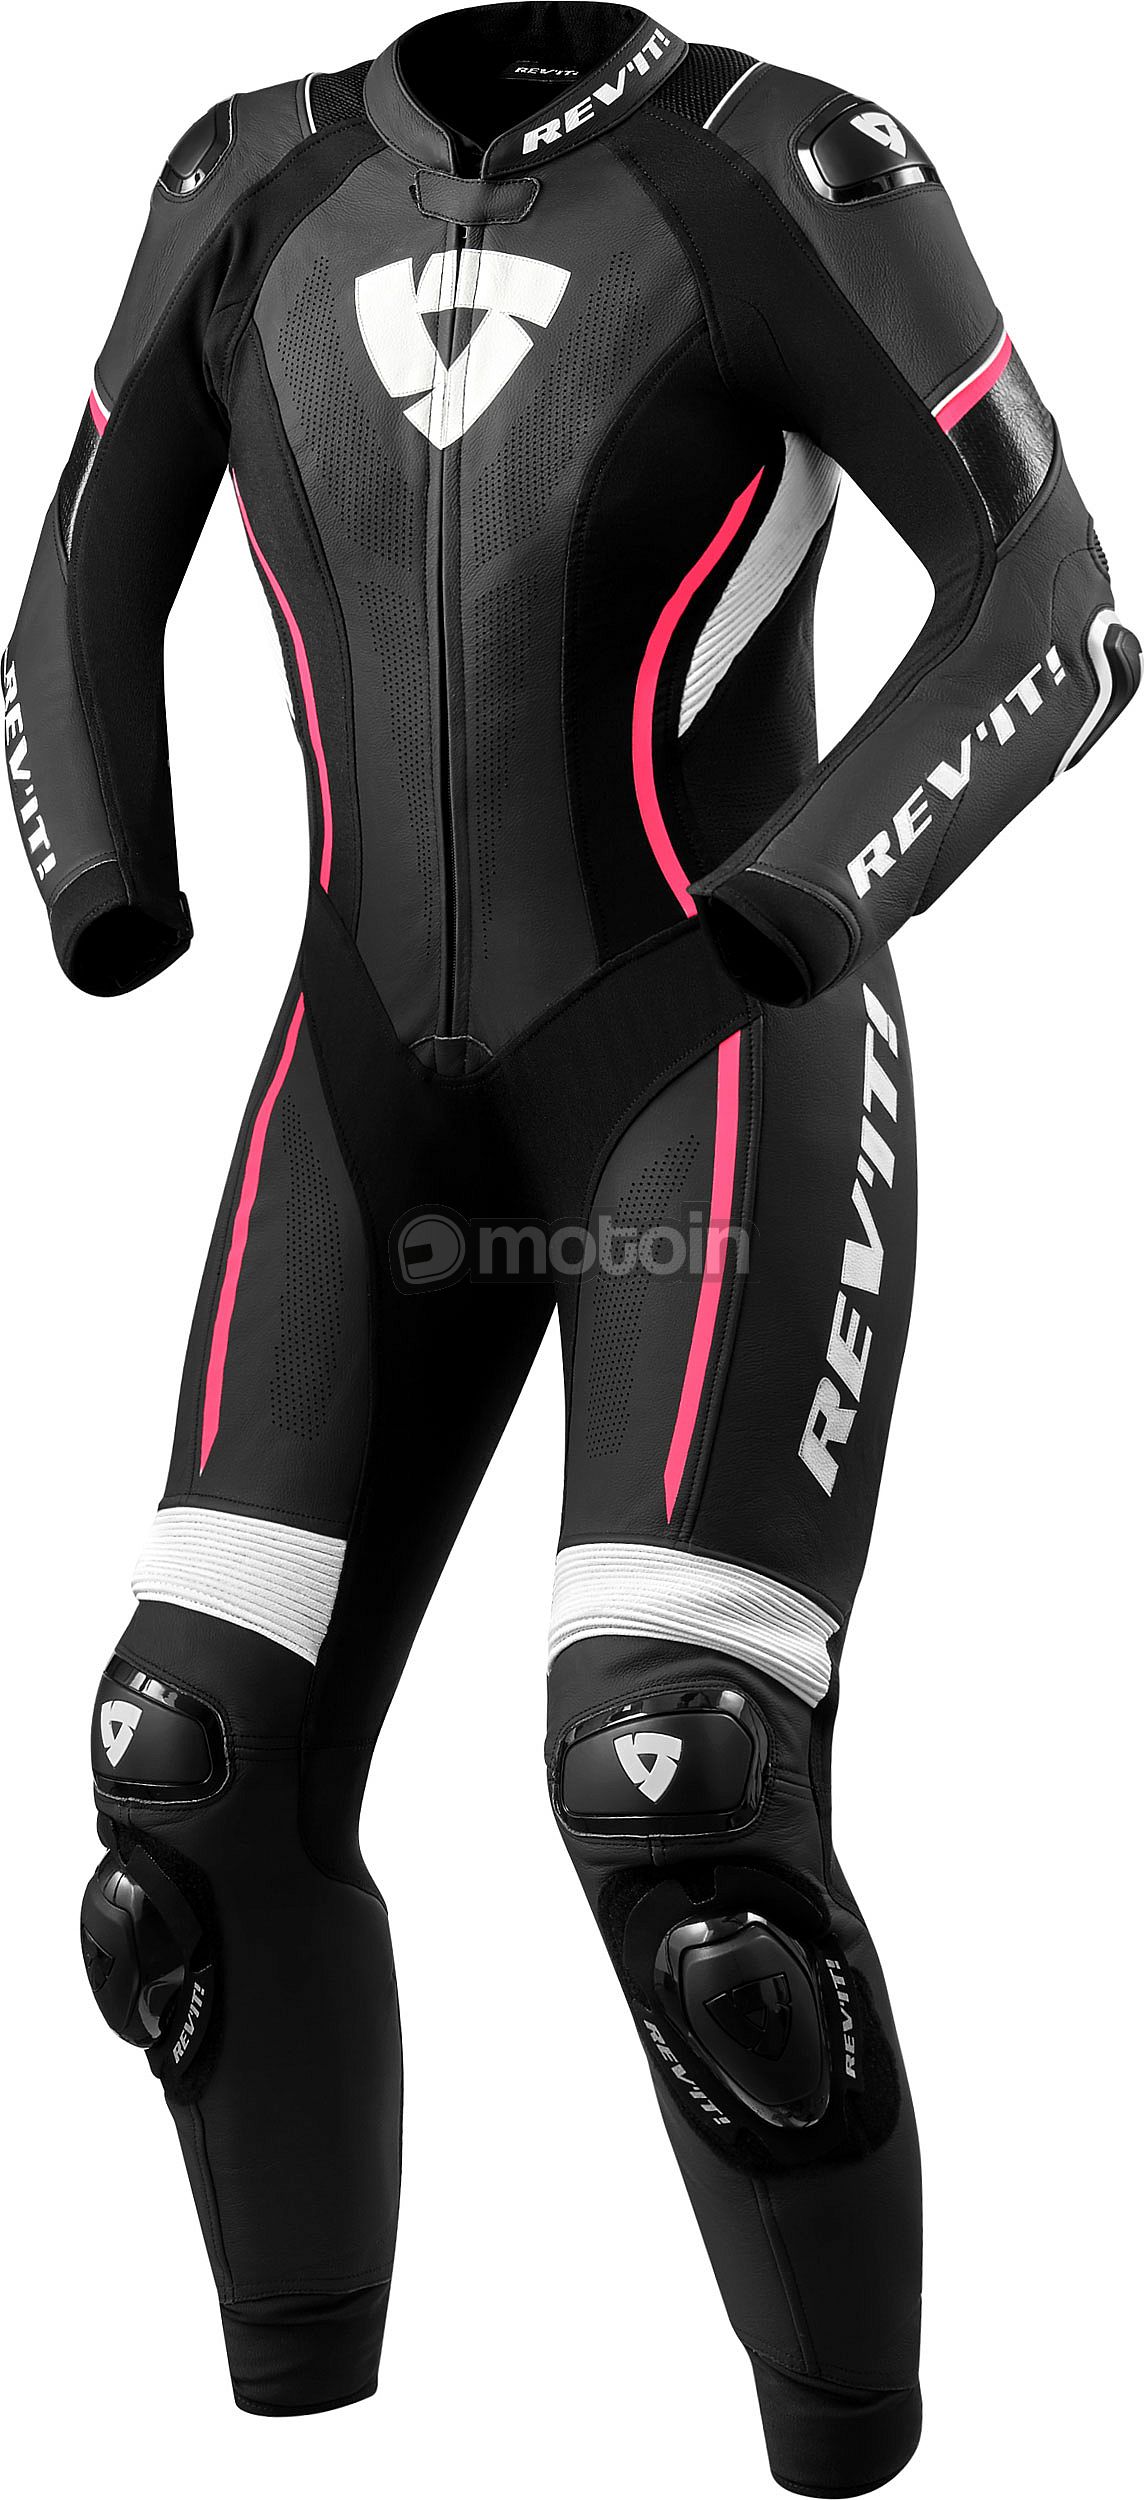 REV'IT - Xena 3 Ladies motorcycle pants - Biker Outfit